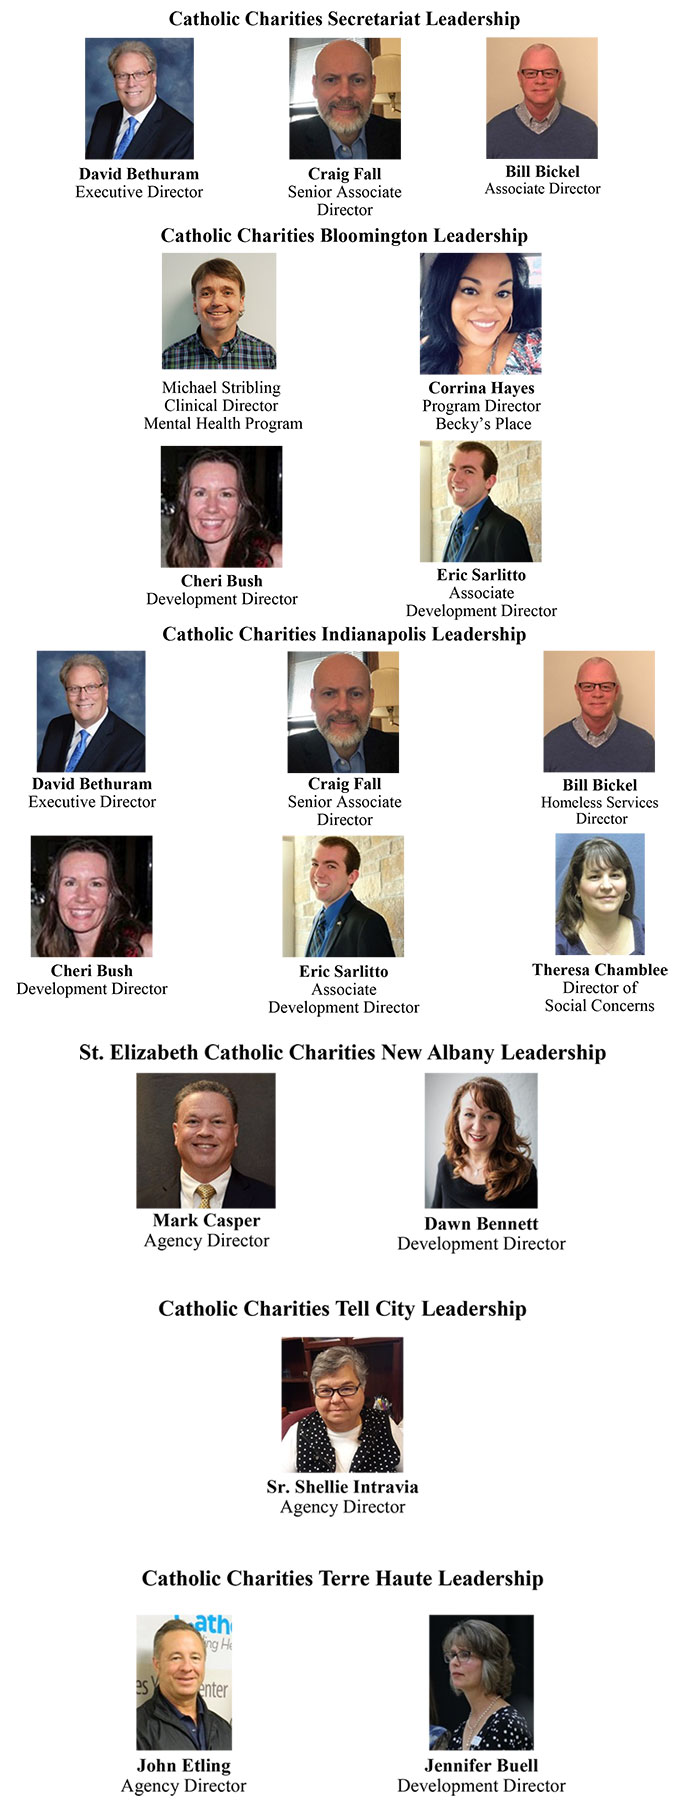 Catholic Charities leadership